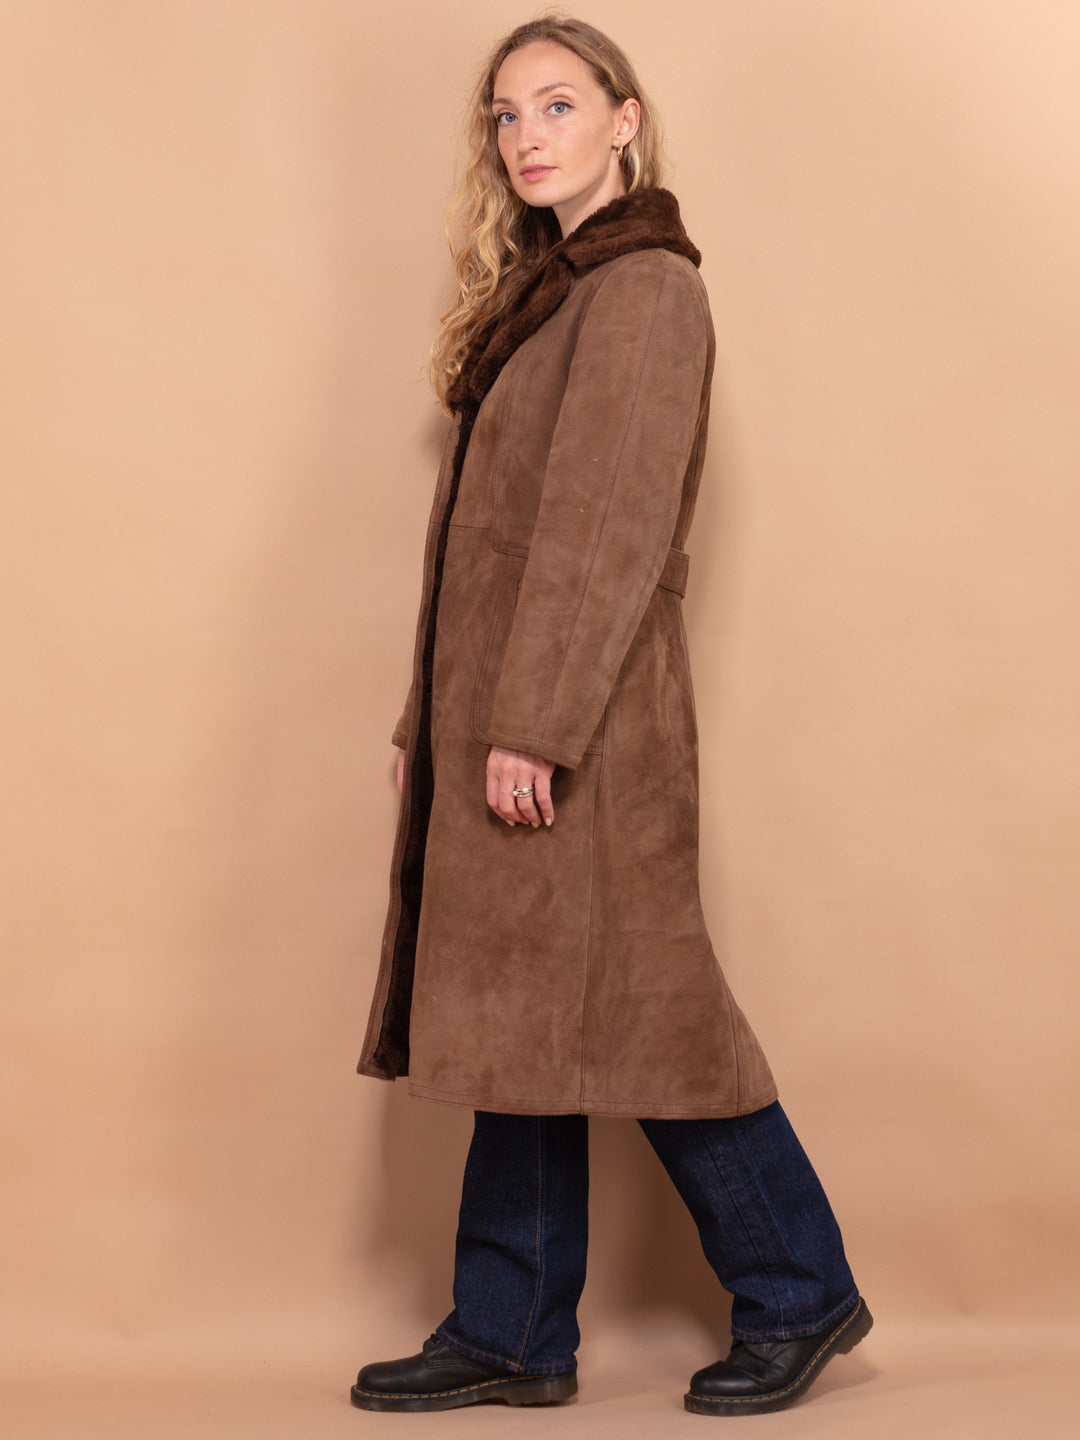 Brown Suede Coat 70's, Size Medium M, Warm Penny Lane Winter Coat, Brown Sherpa Overcoat, Elegant Shearling Coat, Winter Outerwear